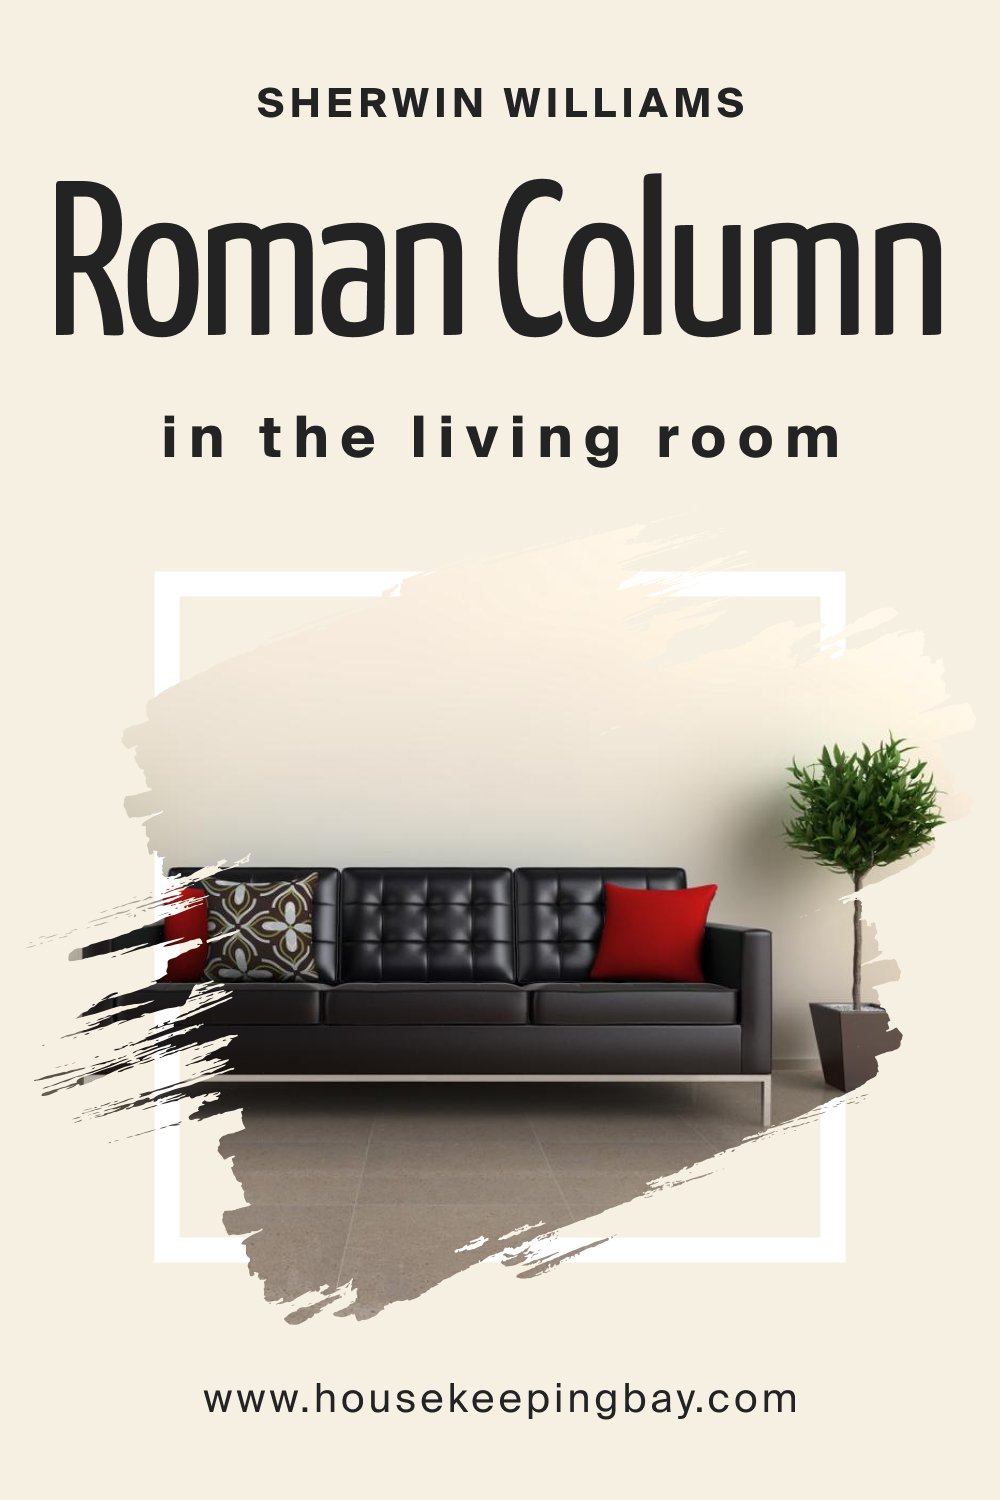 Sherwin Williams. SW Roman Column In the Living Room